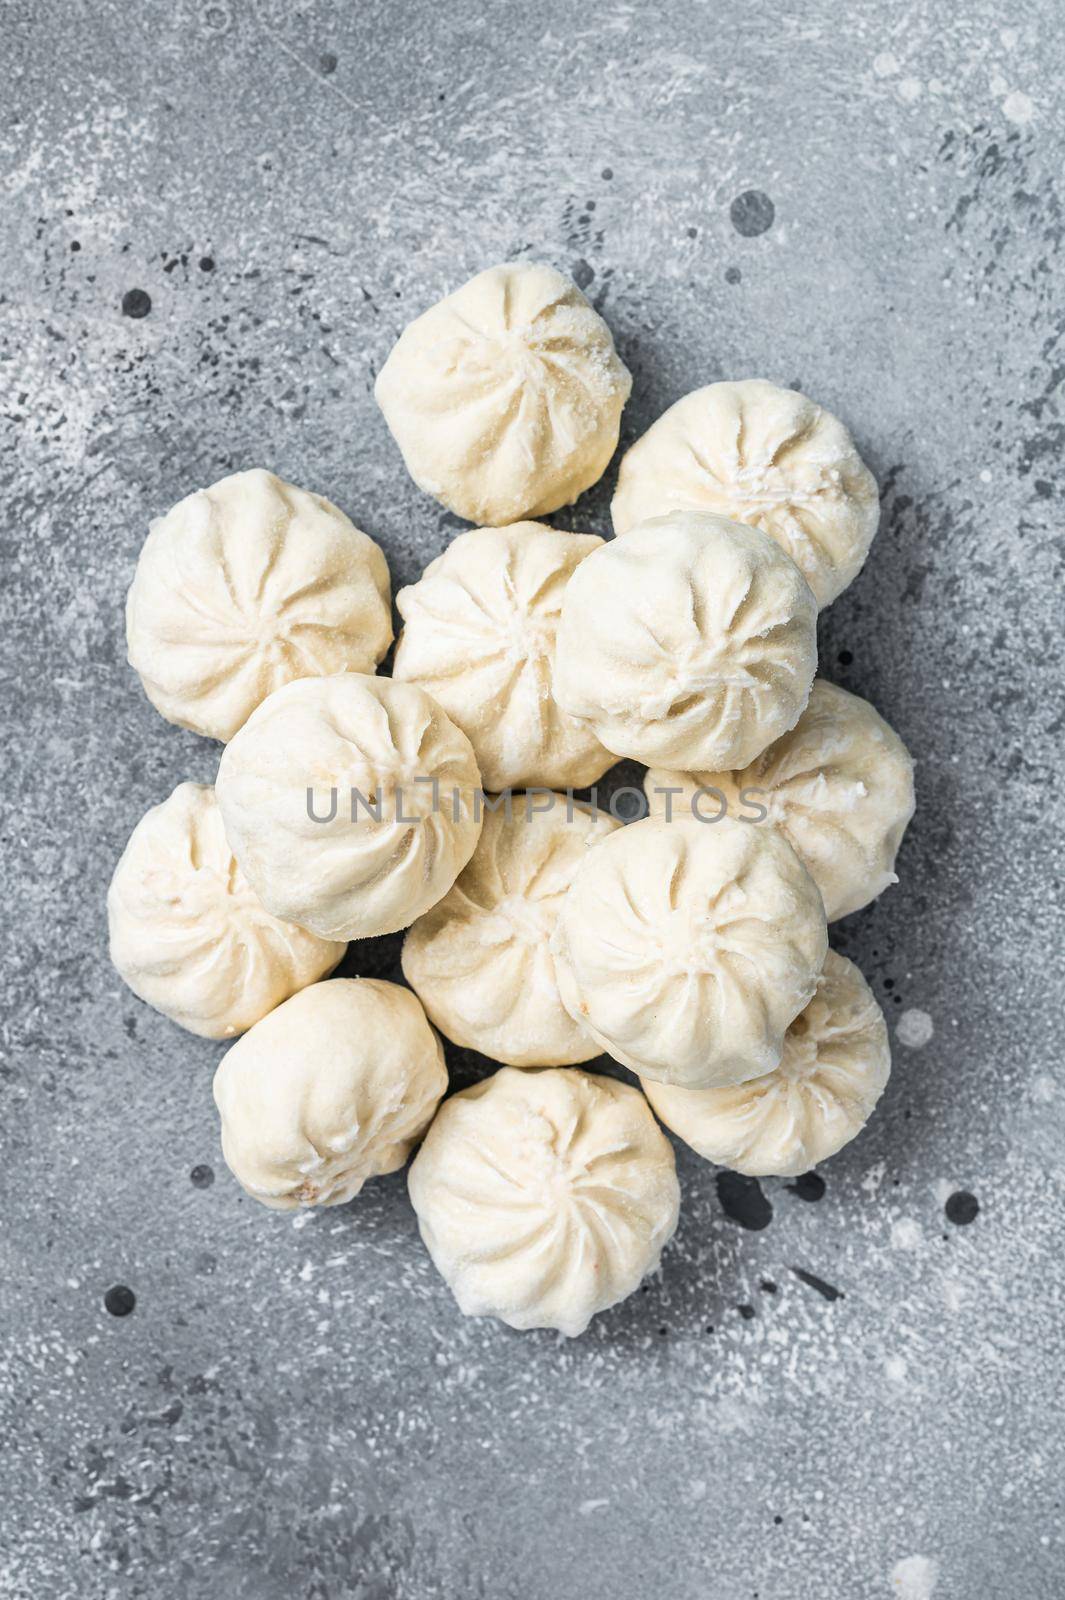 Frozen uncooked baozi dumplings stuffed with meat. Gray background. Top view.